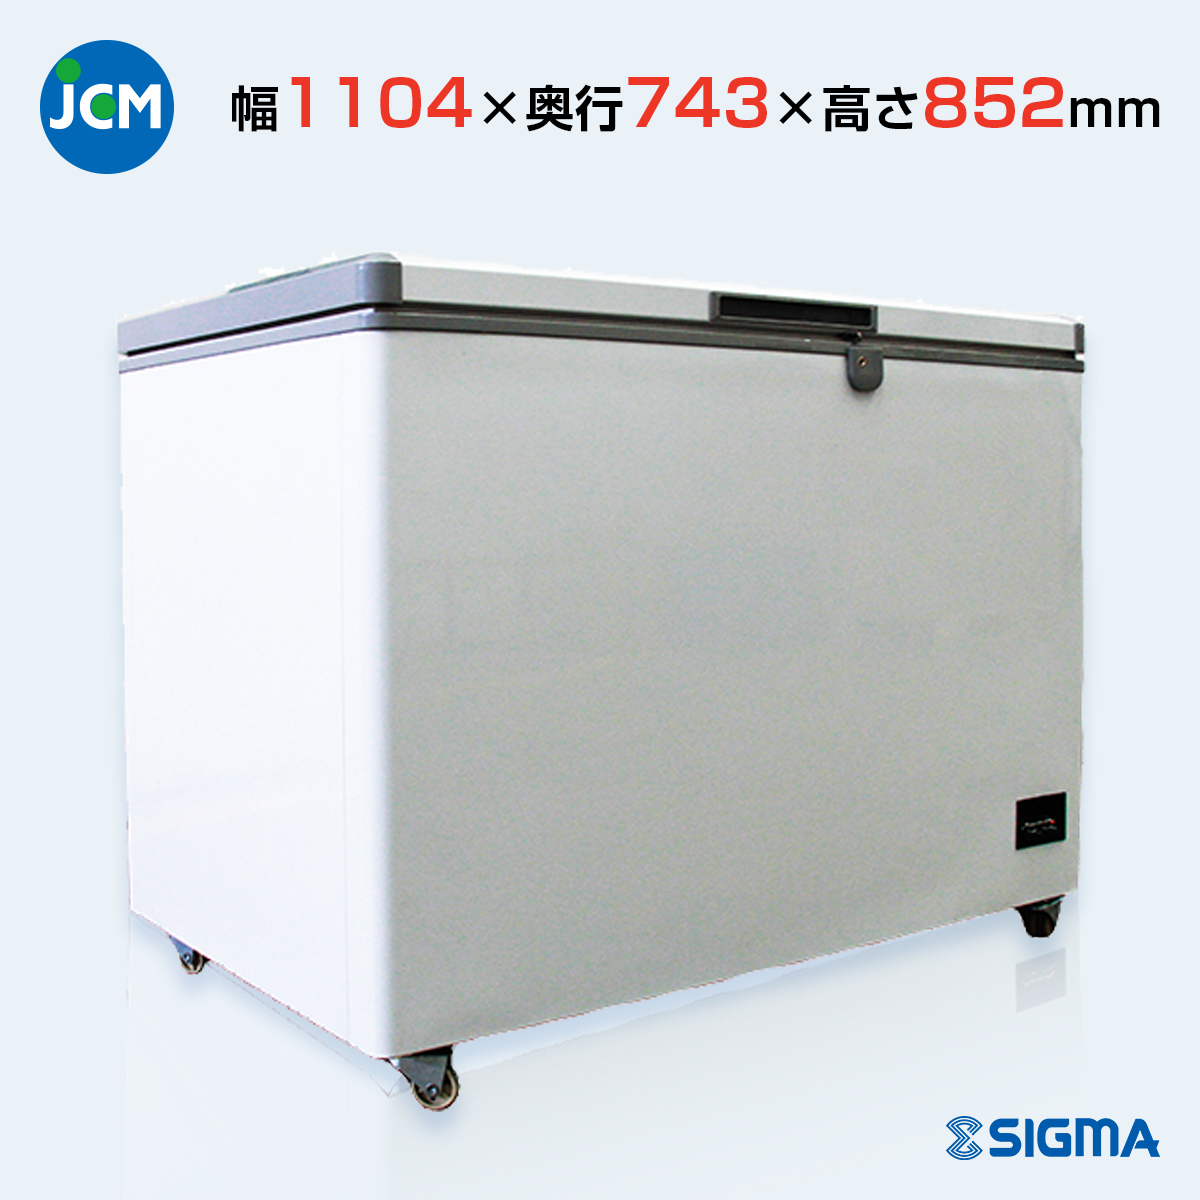 JCMC-310D 冷凍ストッカー／
幅1104×奥行743×高さ852mm